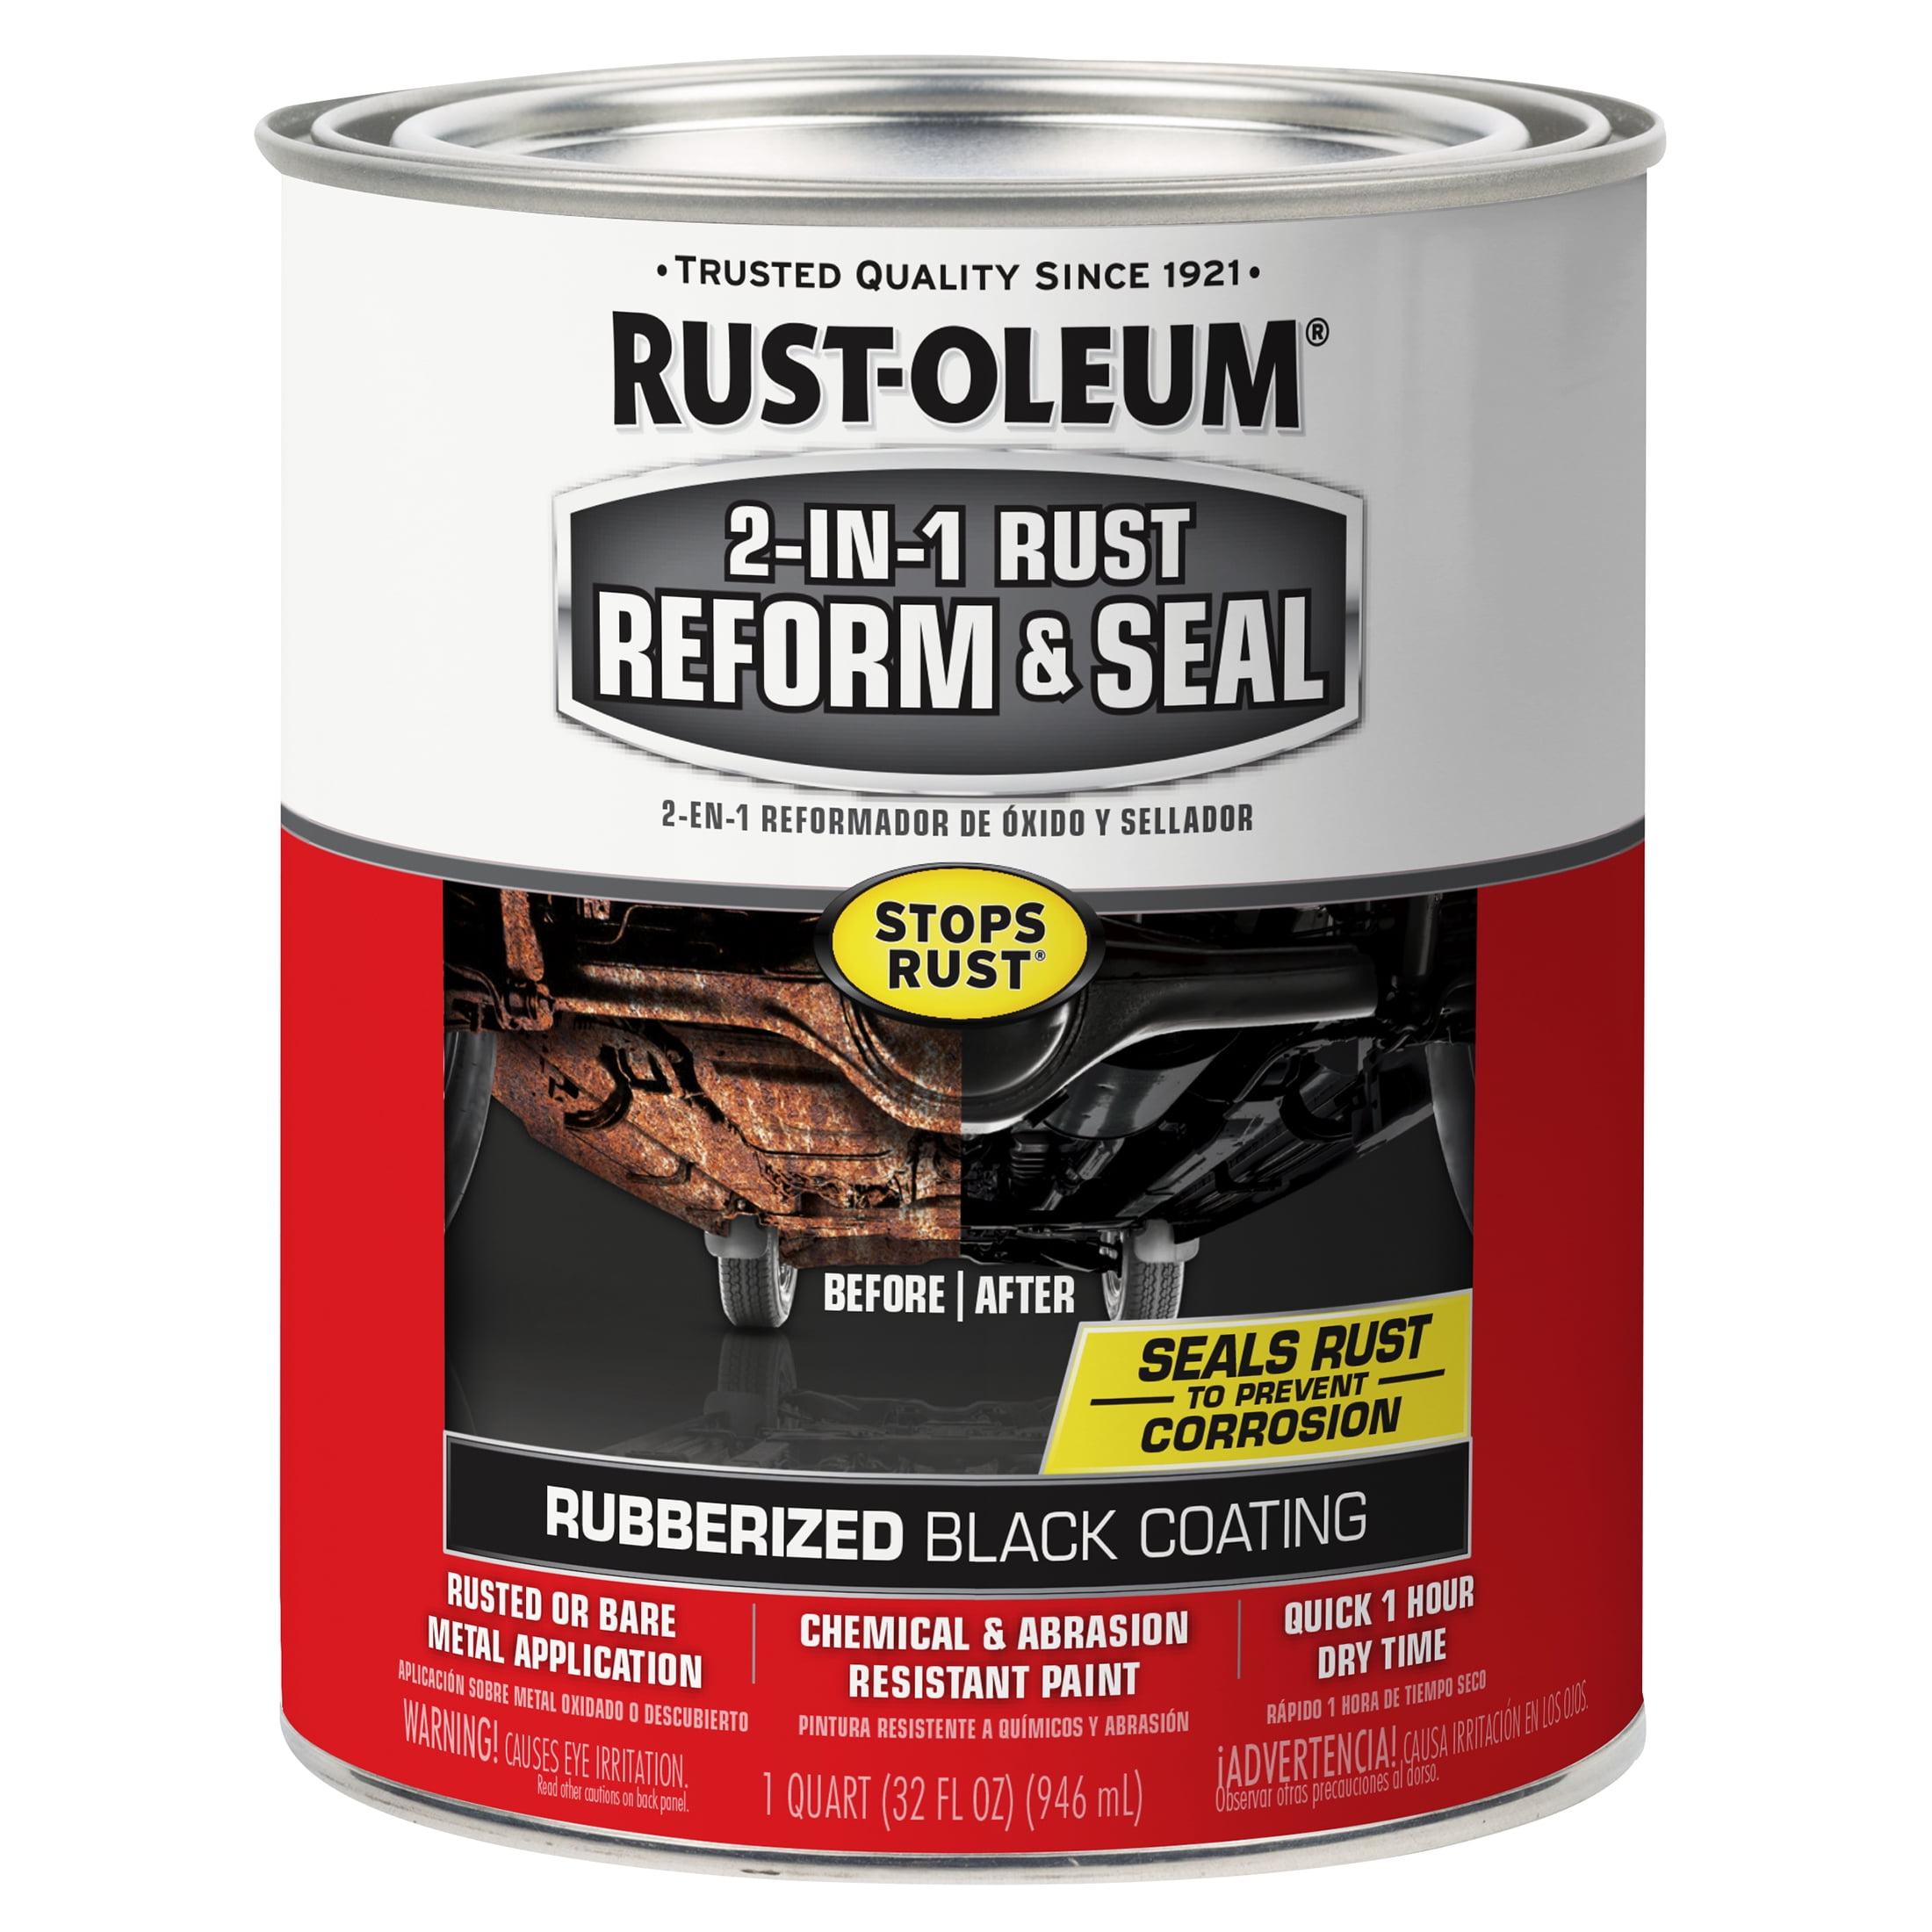 Rust-Oleum Professional Flat Black Spray Paint 15 oz - Ace Hardware